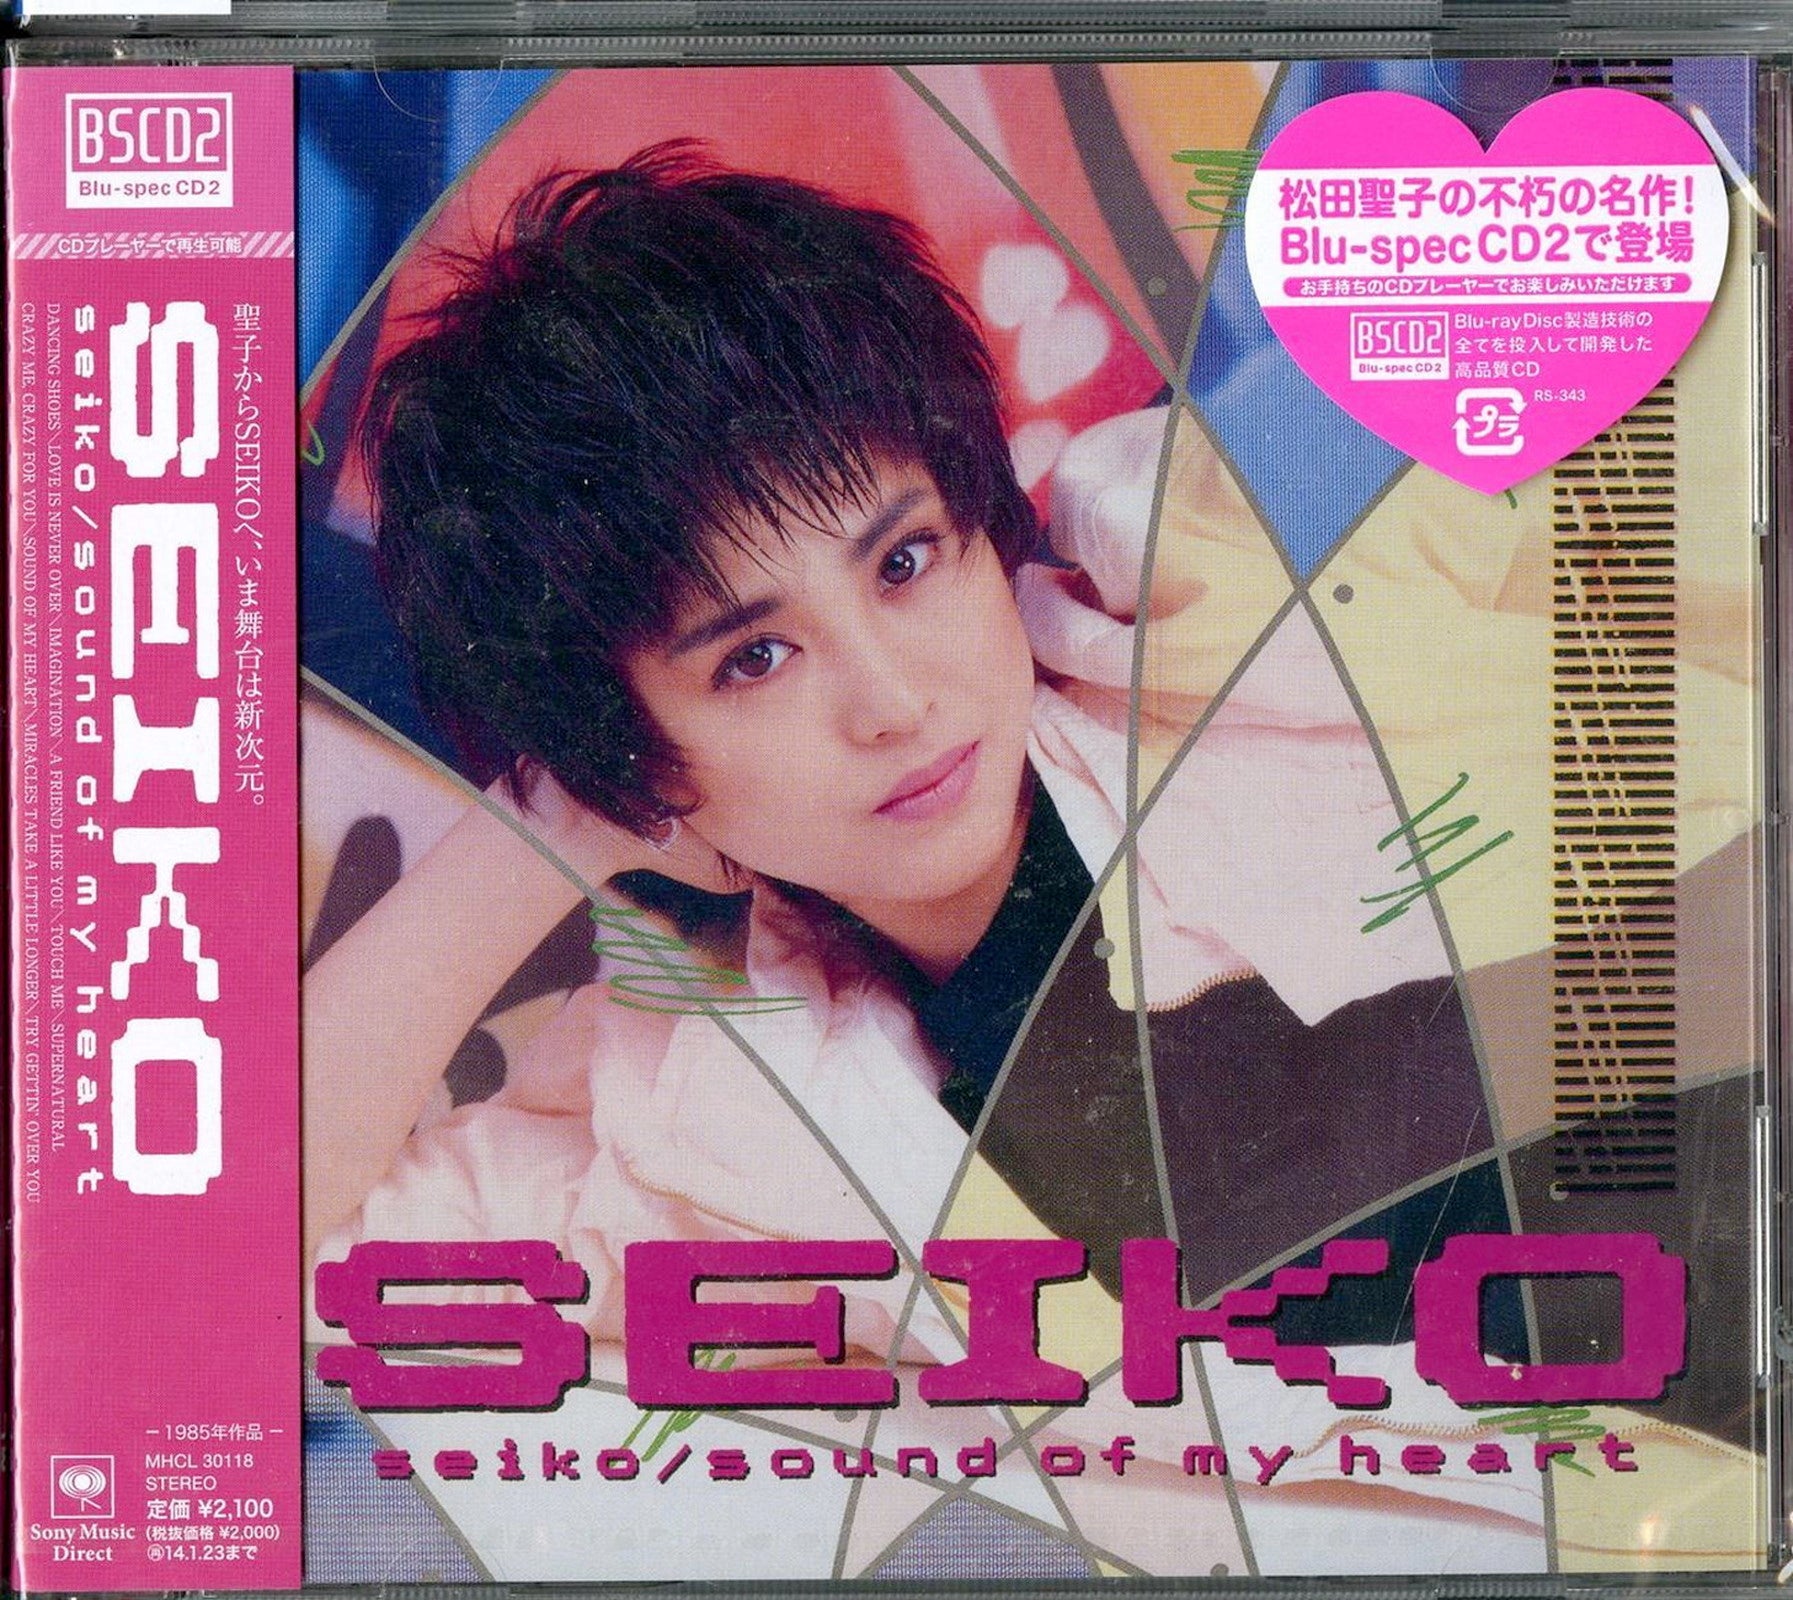 Seiko Matsuda - Sound Of My Heart - Japan Blu-spec CD2 – CDs Vinyl